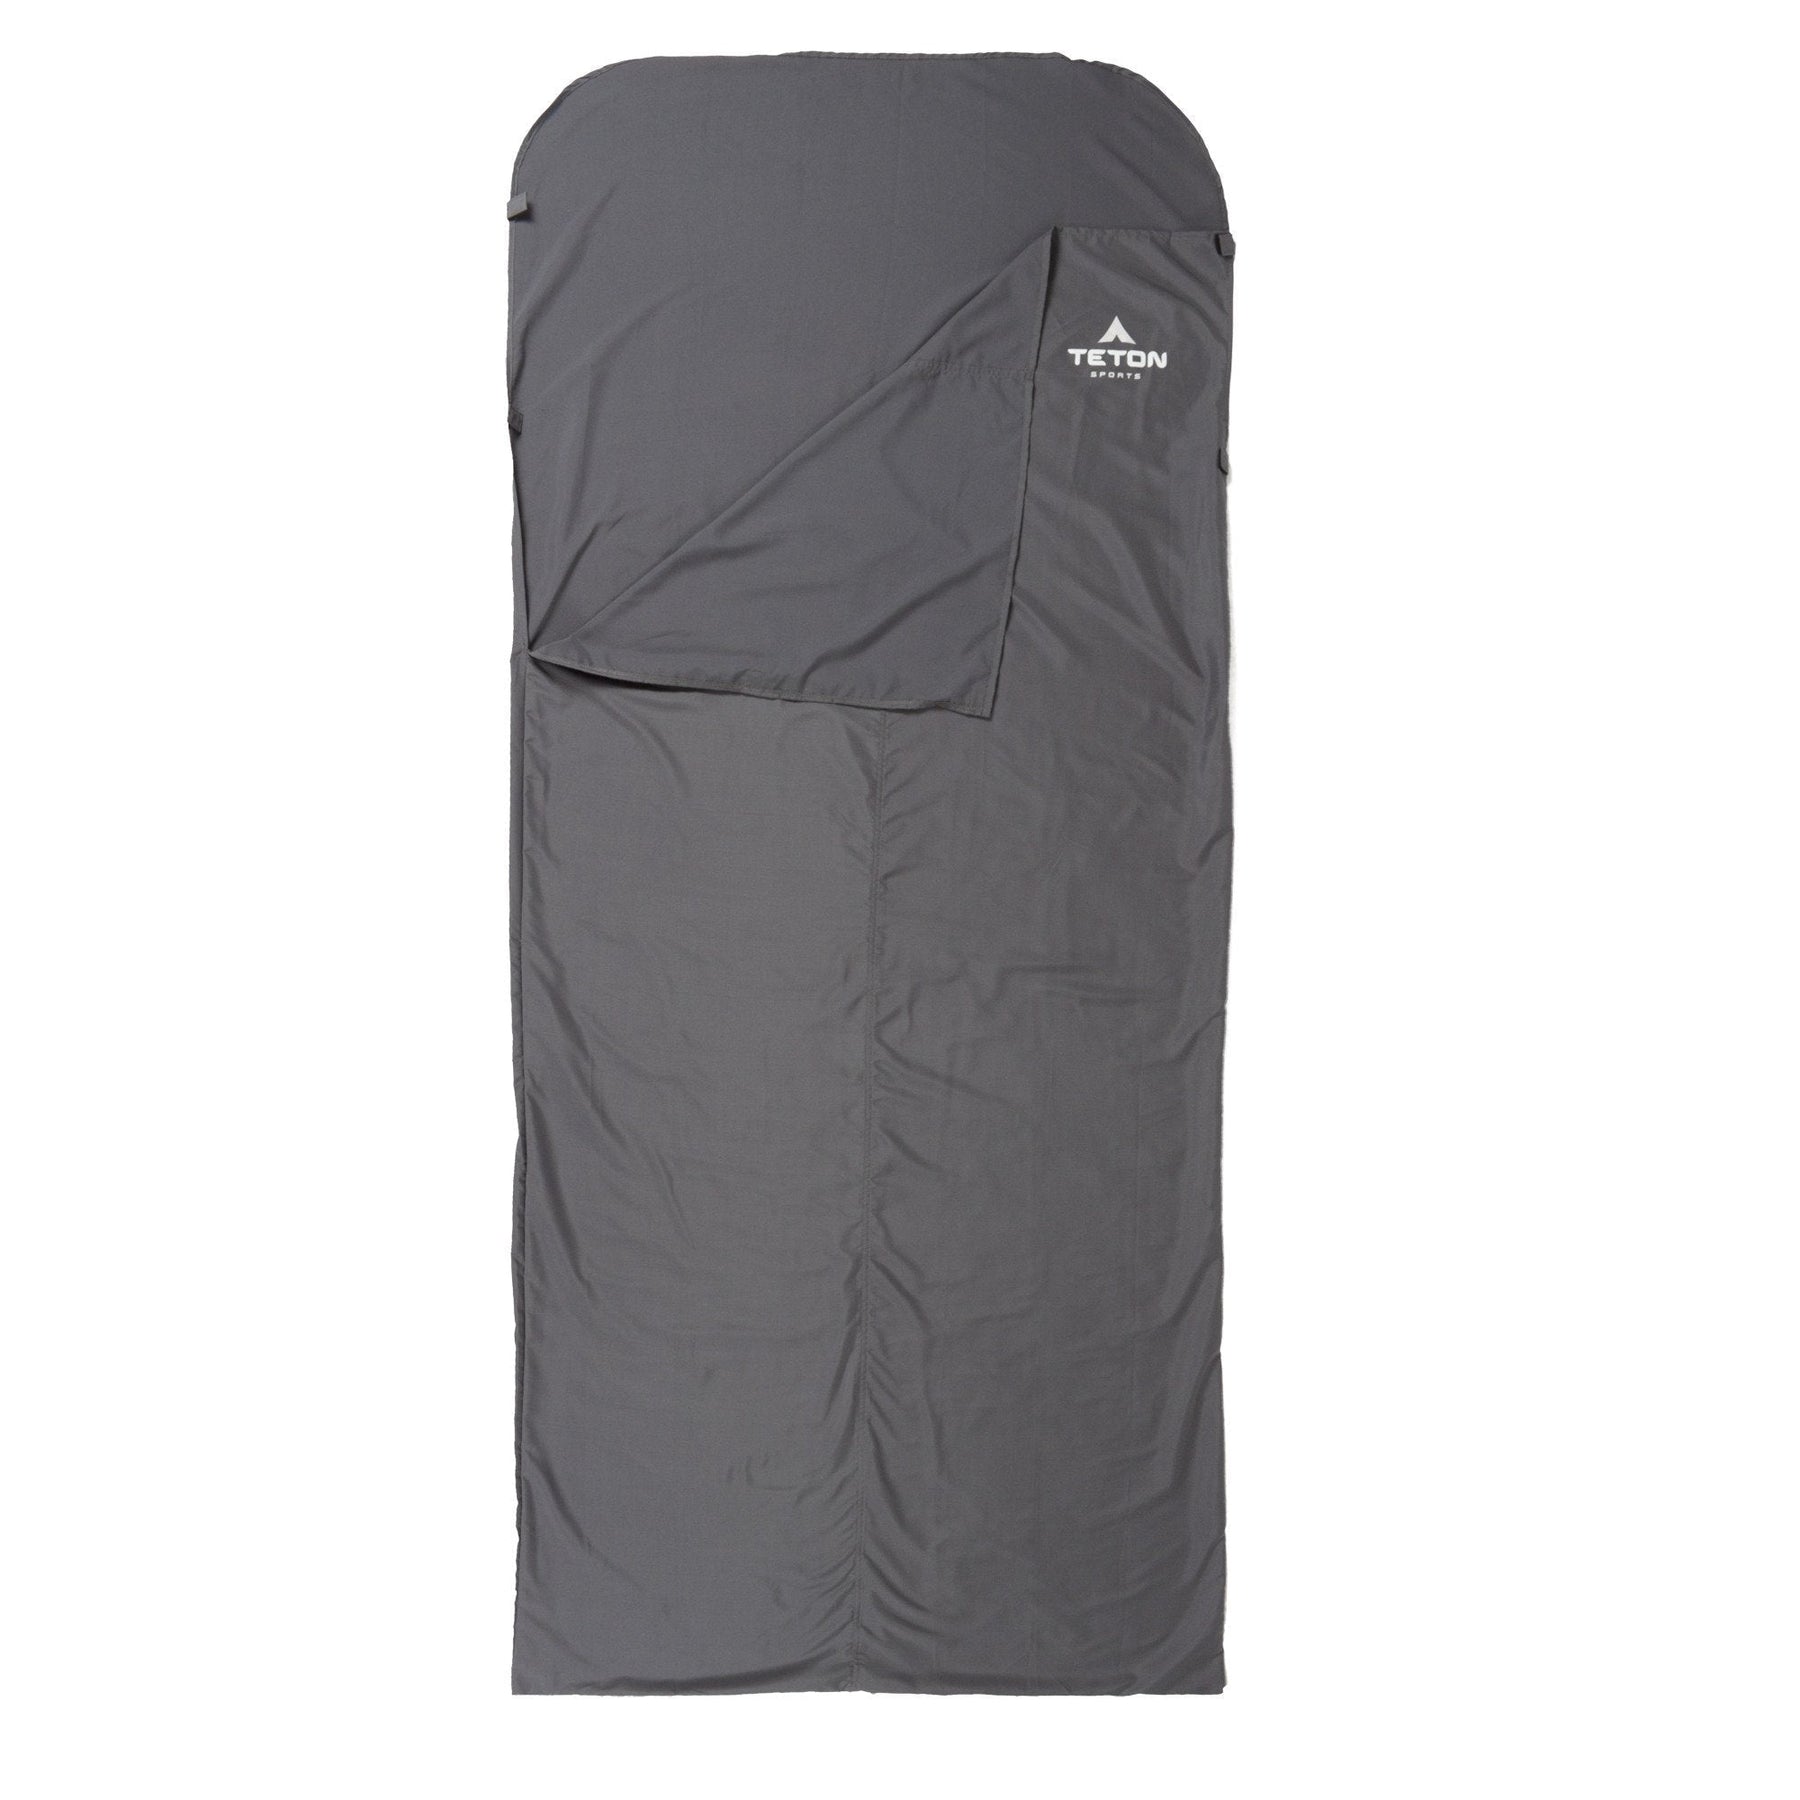 TETON Sports XL Sleeping Bag Liner in Cotton 179C